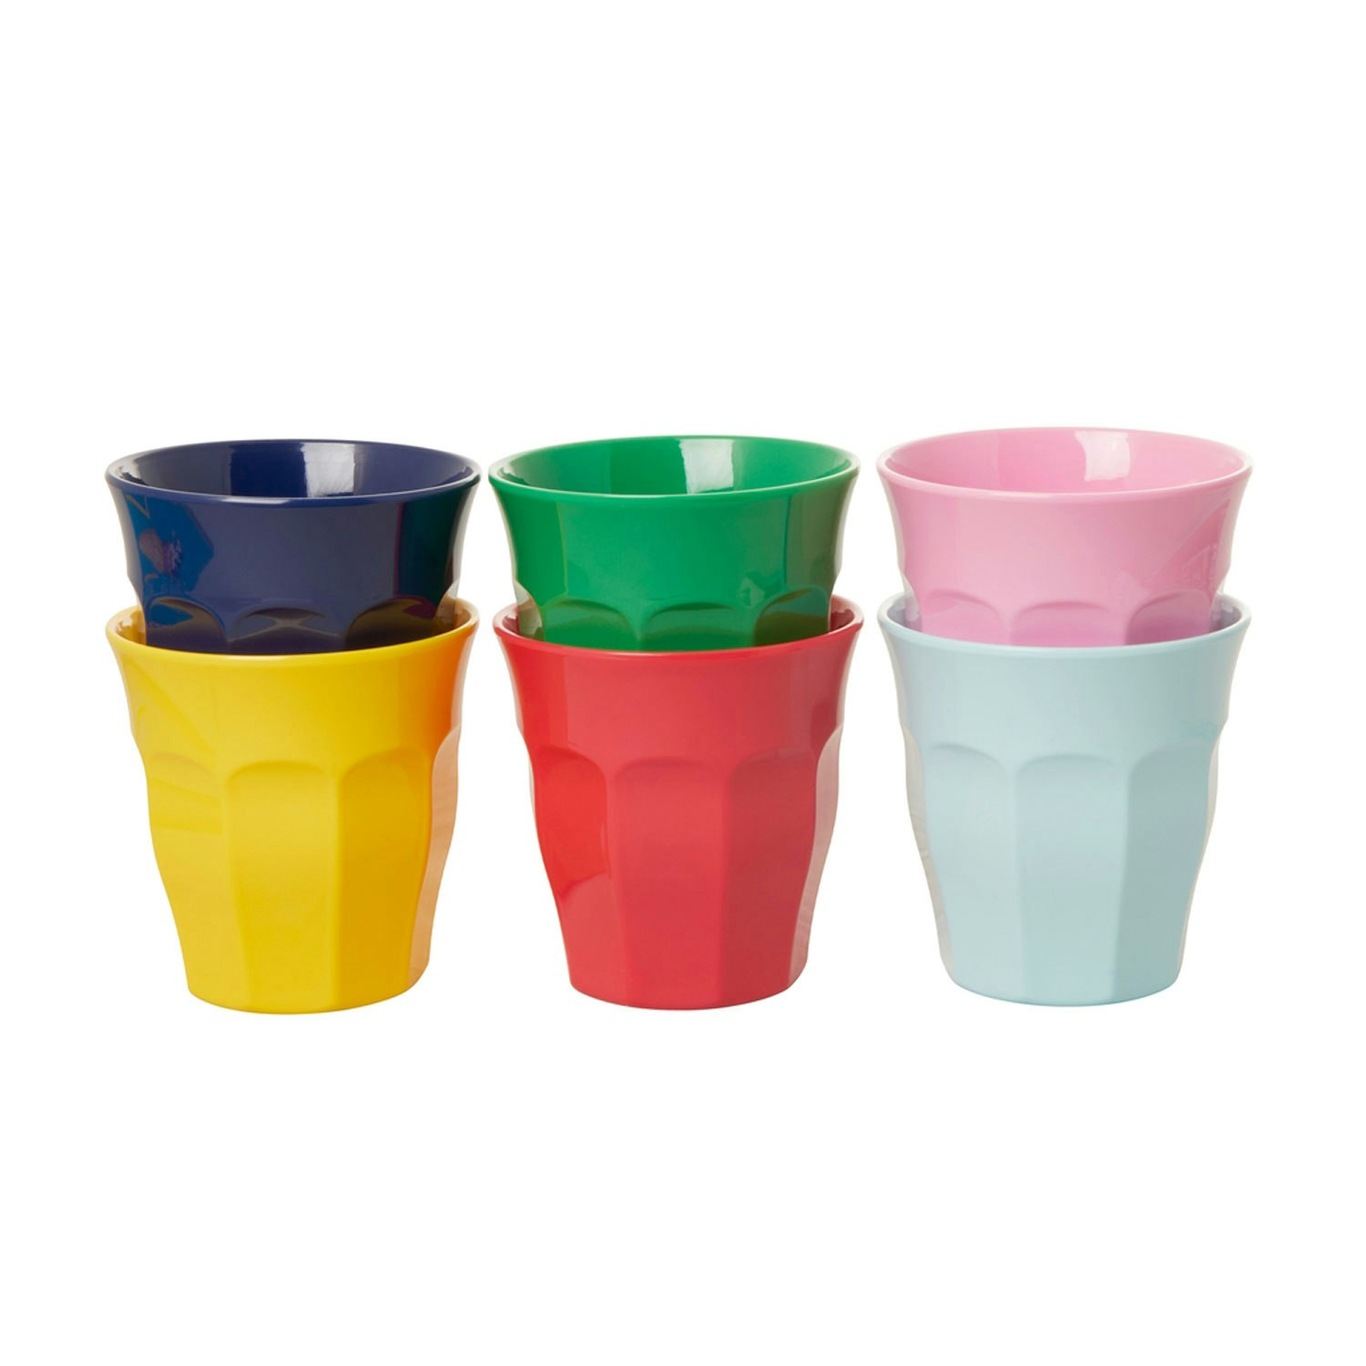 https://royaldesign.com/image/2/rice-melamine-cups-20-cl-6-pack-0?w=800&quality=80